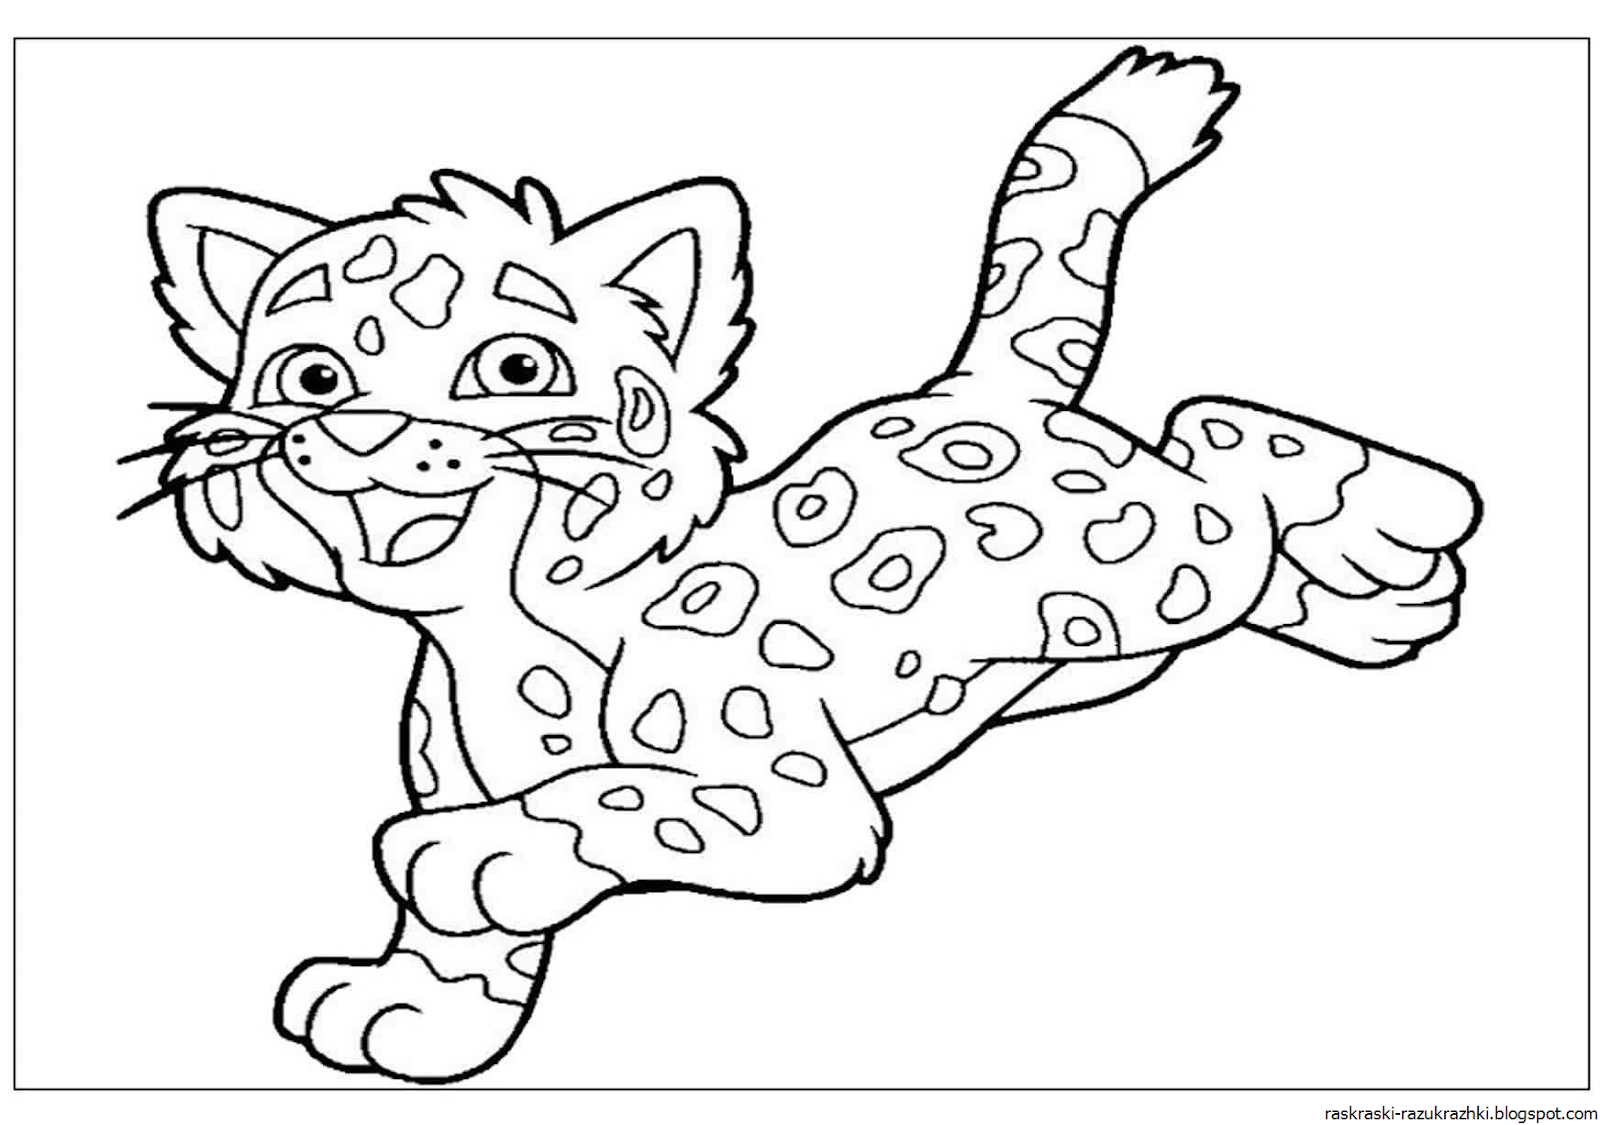 Раскраска лео и тиг. Раскраска Лео и Тиг Лео. Лео Тиг Лео гепард. Леопард раскраска для детей. Раскраска Леопардик.